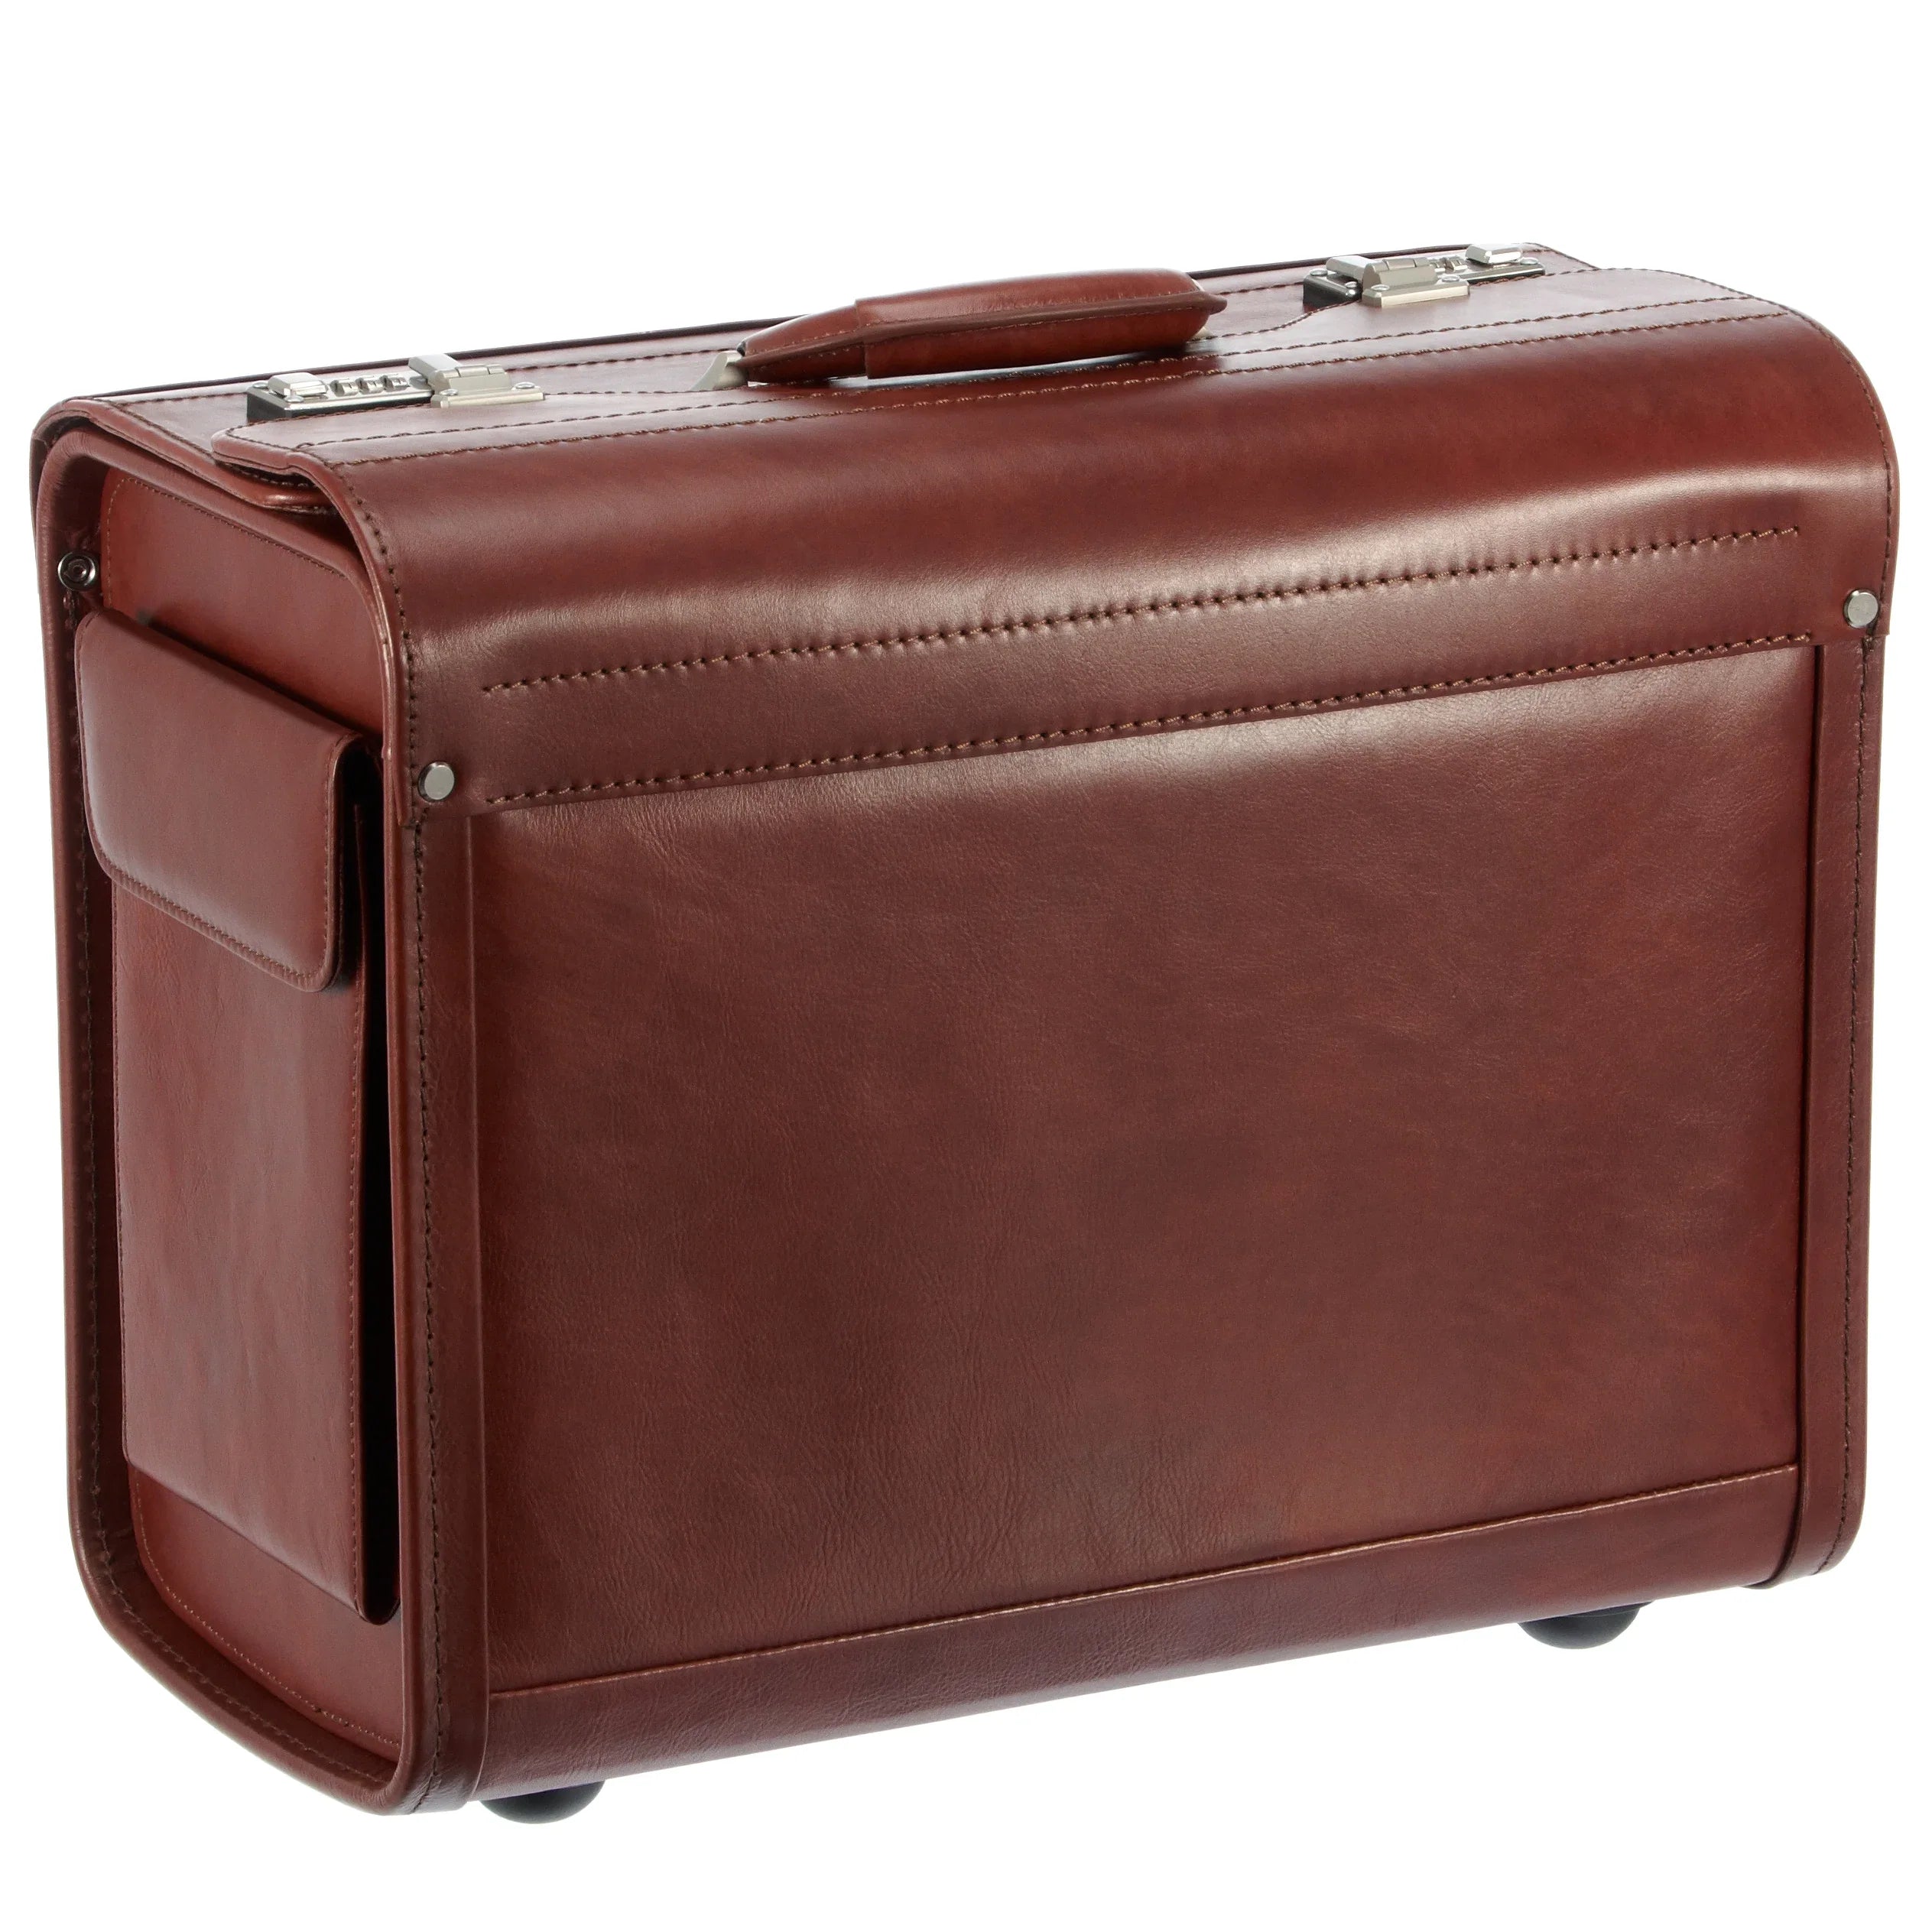 Dermata Business valise pilote cuir 45 cm - marron